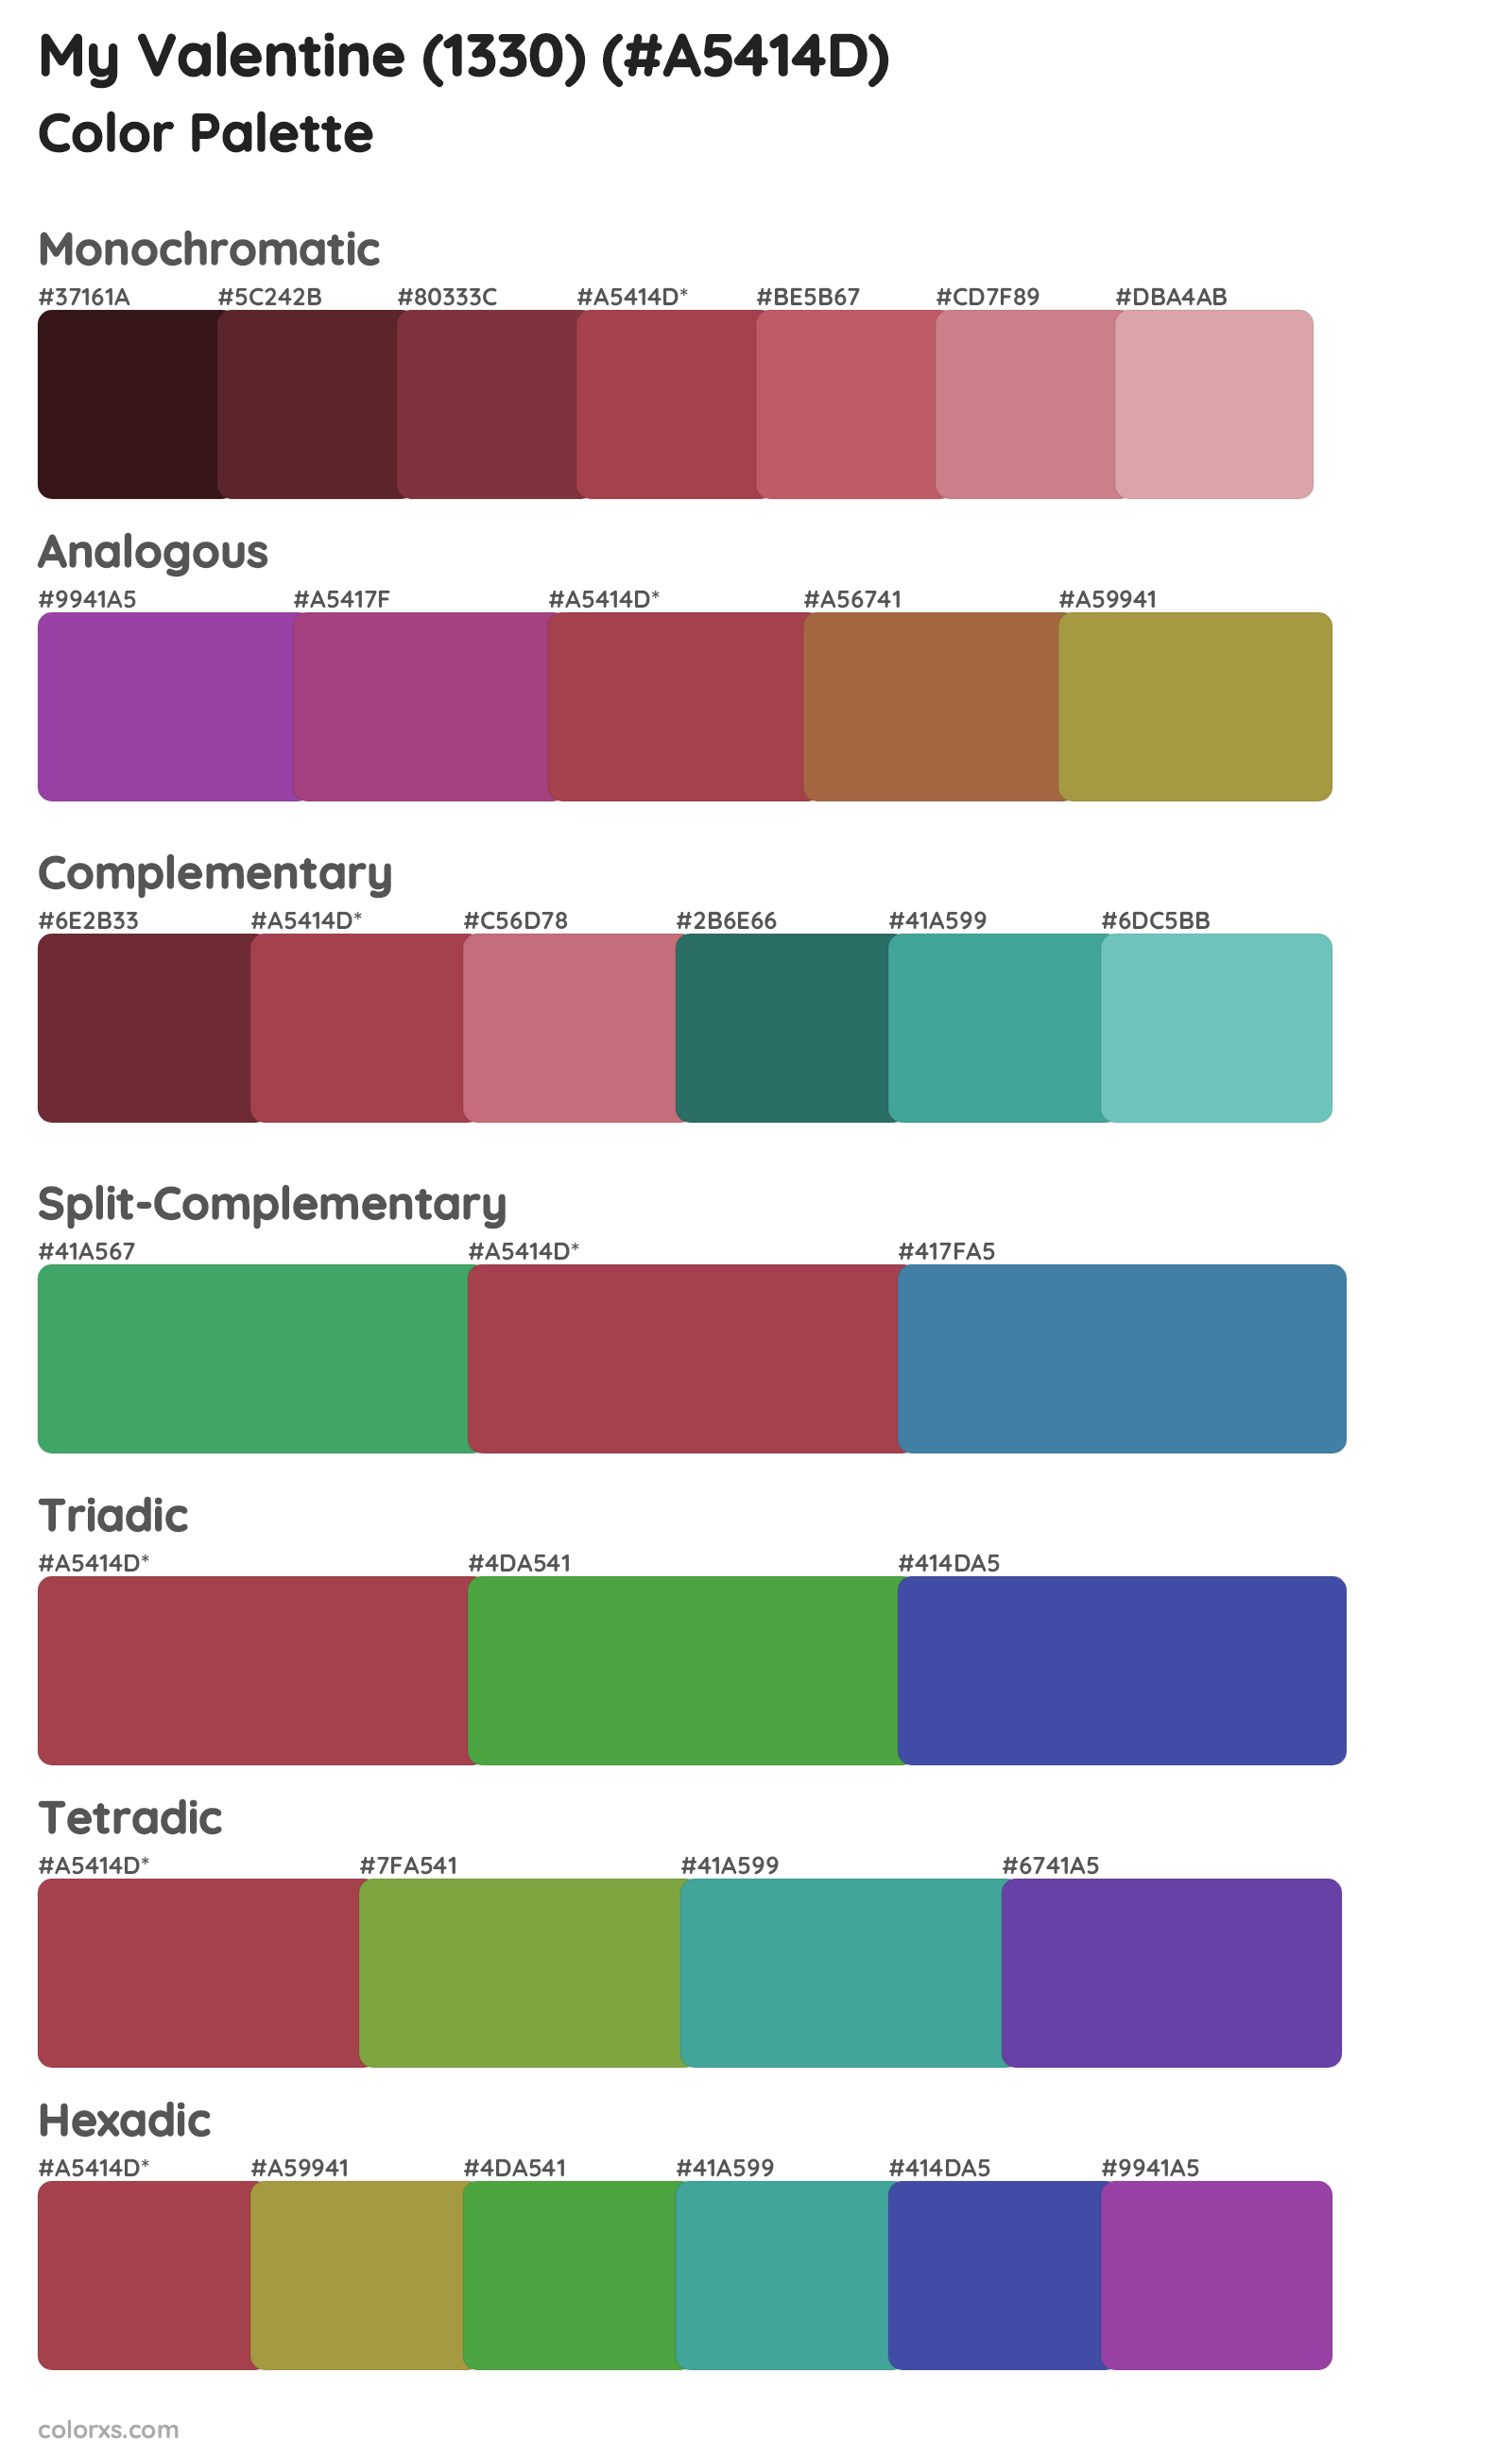 My Valentine (1330) Color Scheme Palettes